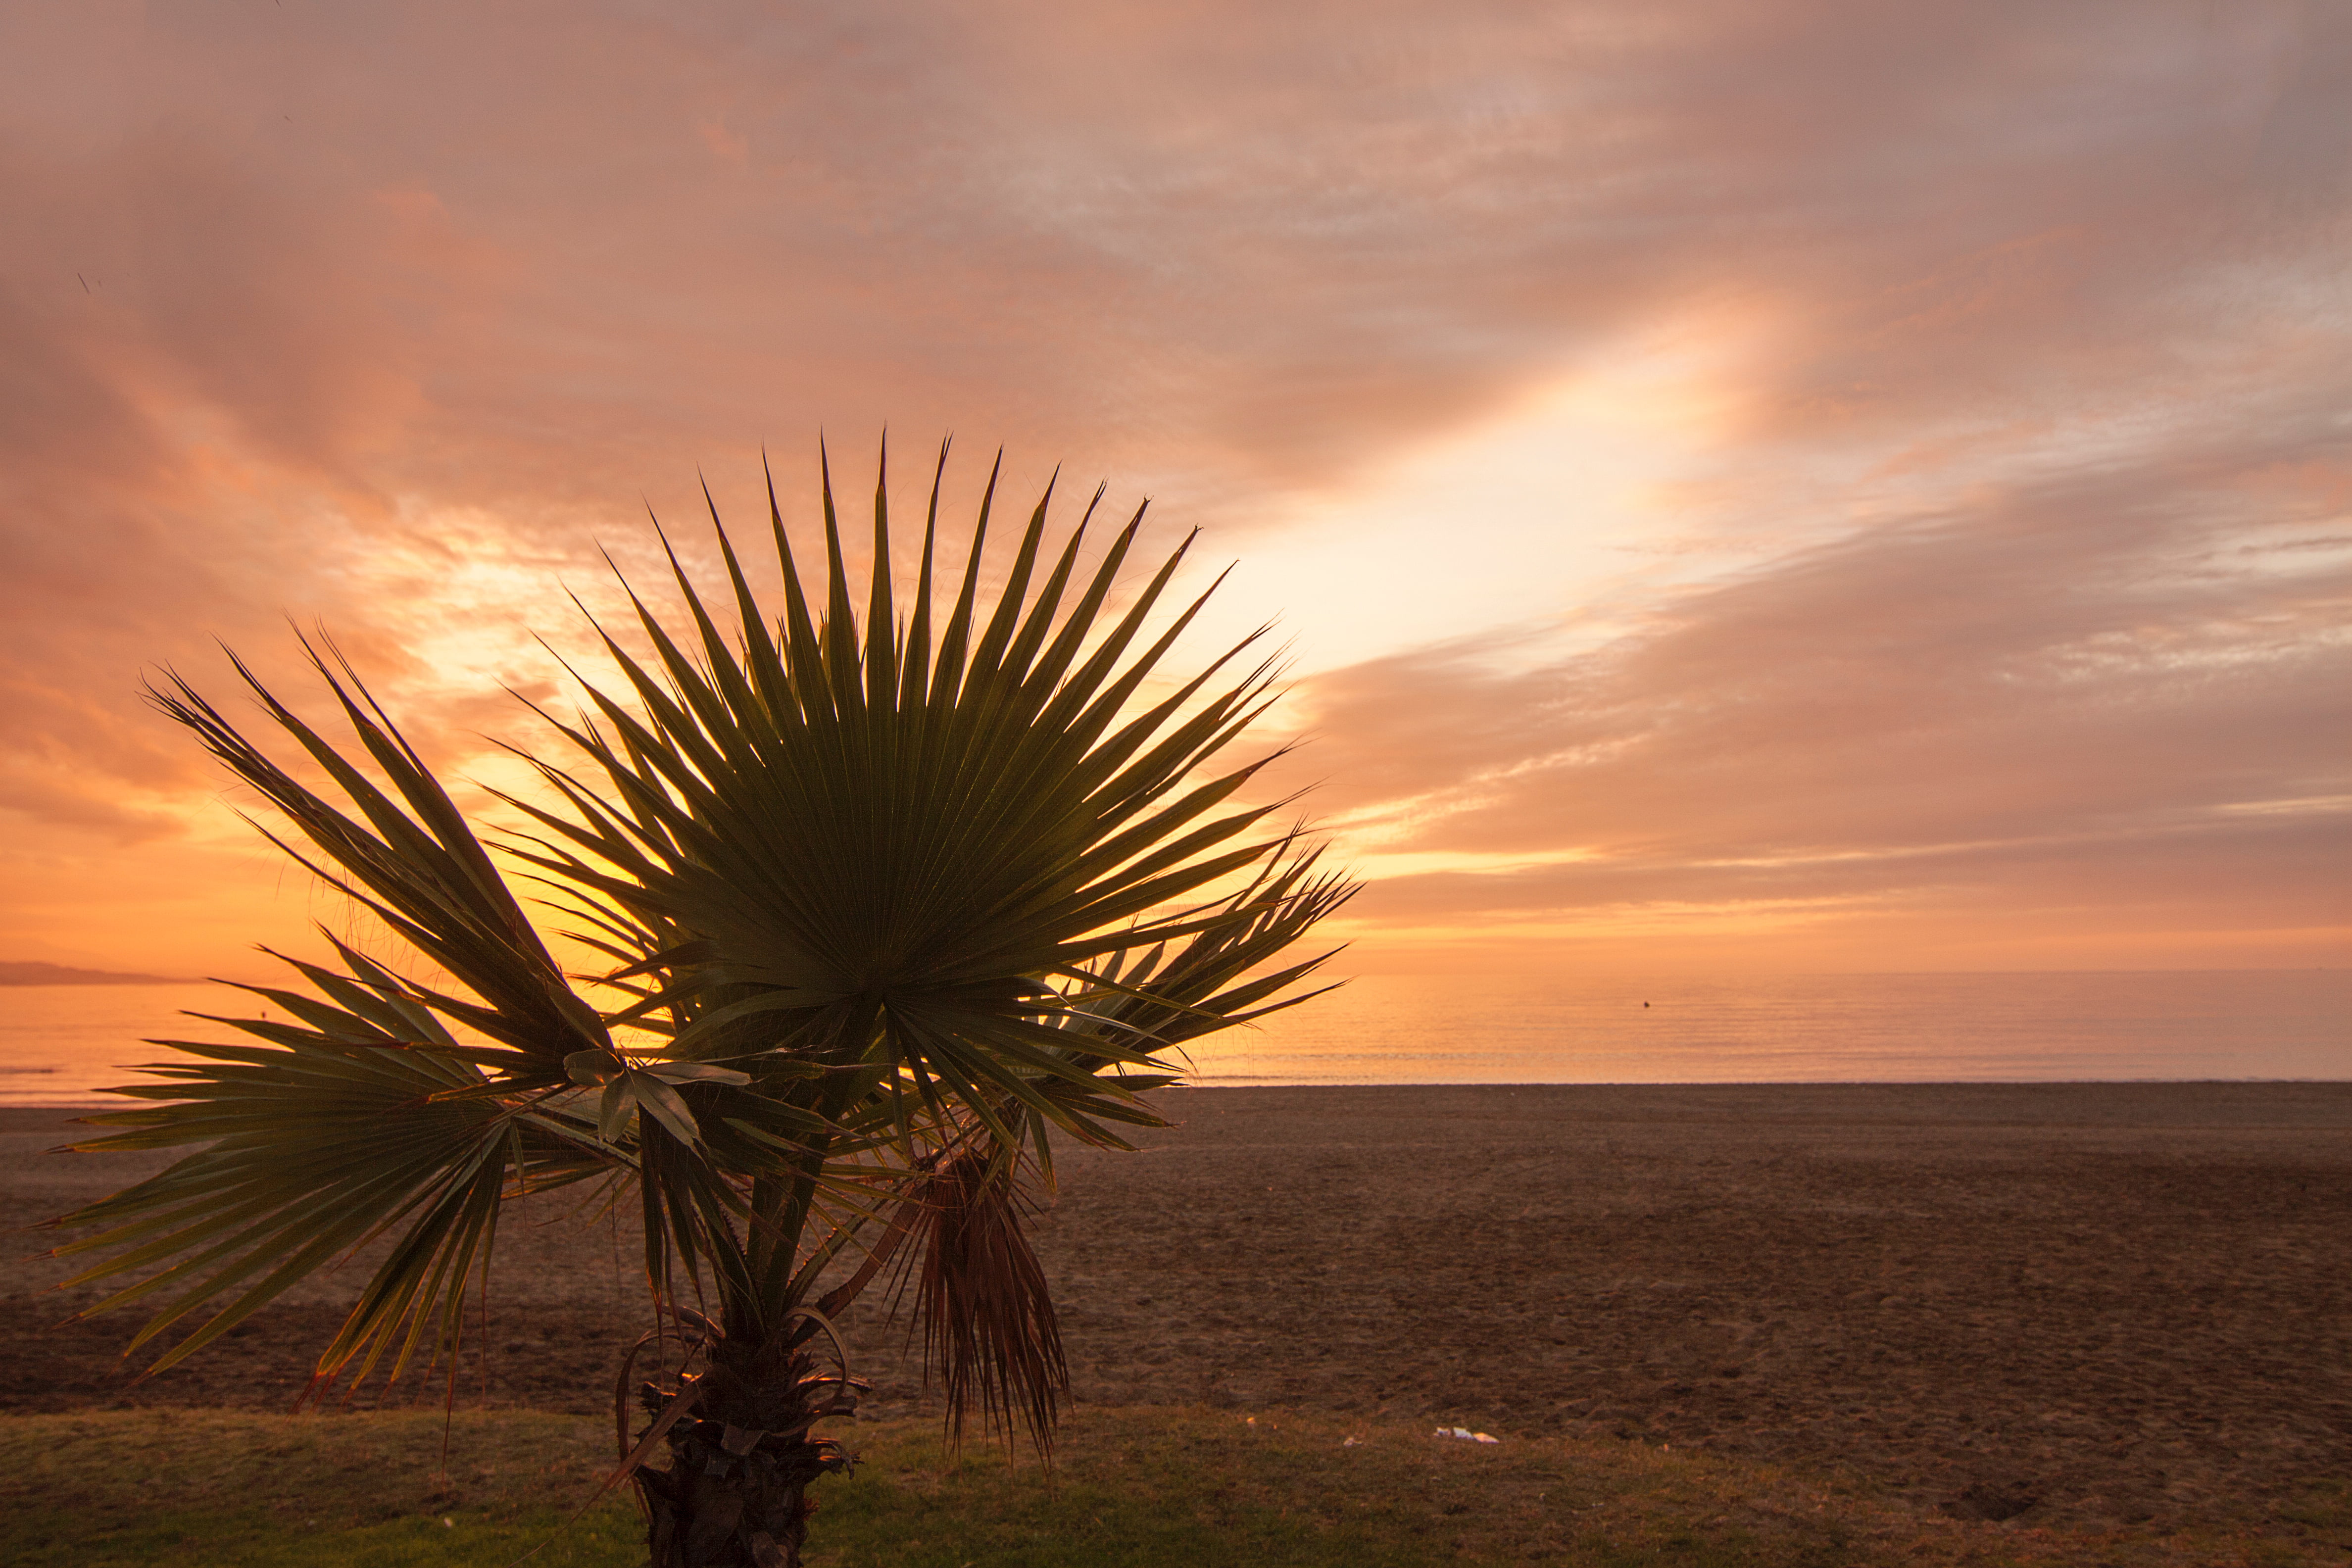 green leaf tree, Palm tree, Beach, Sunset